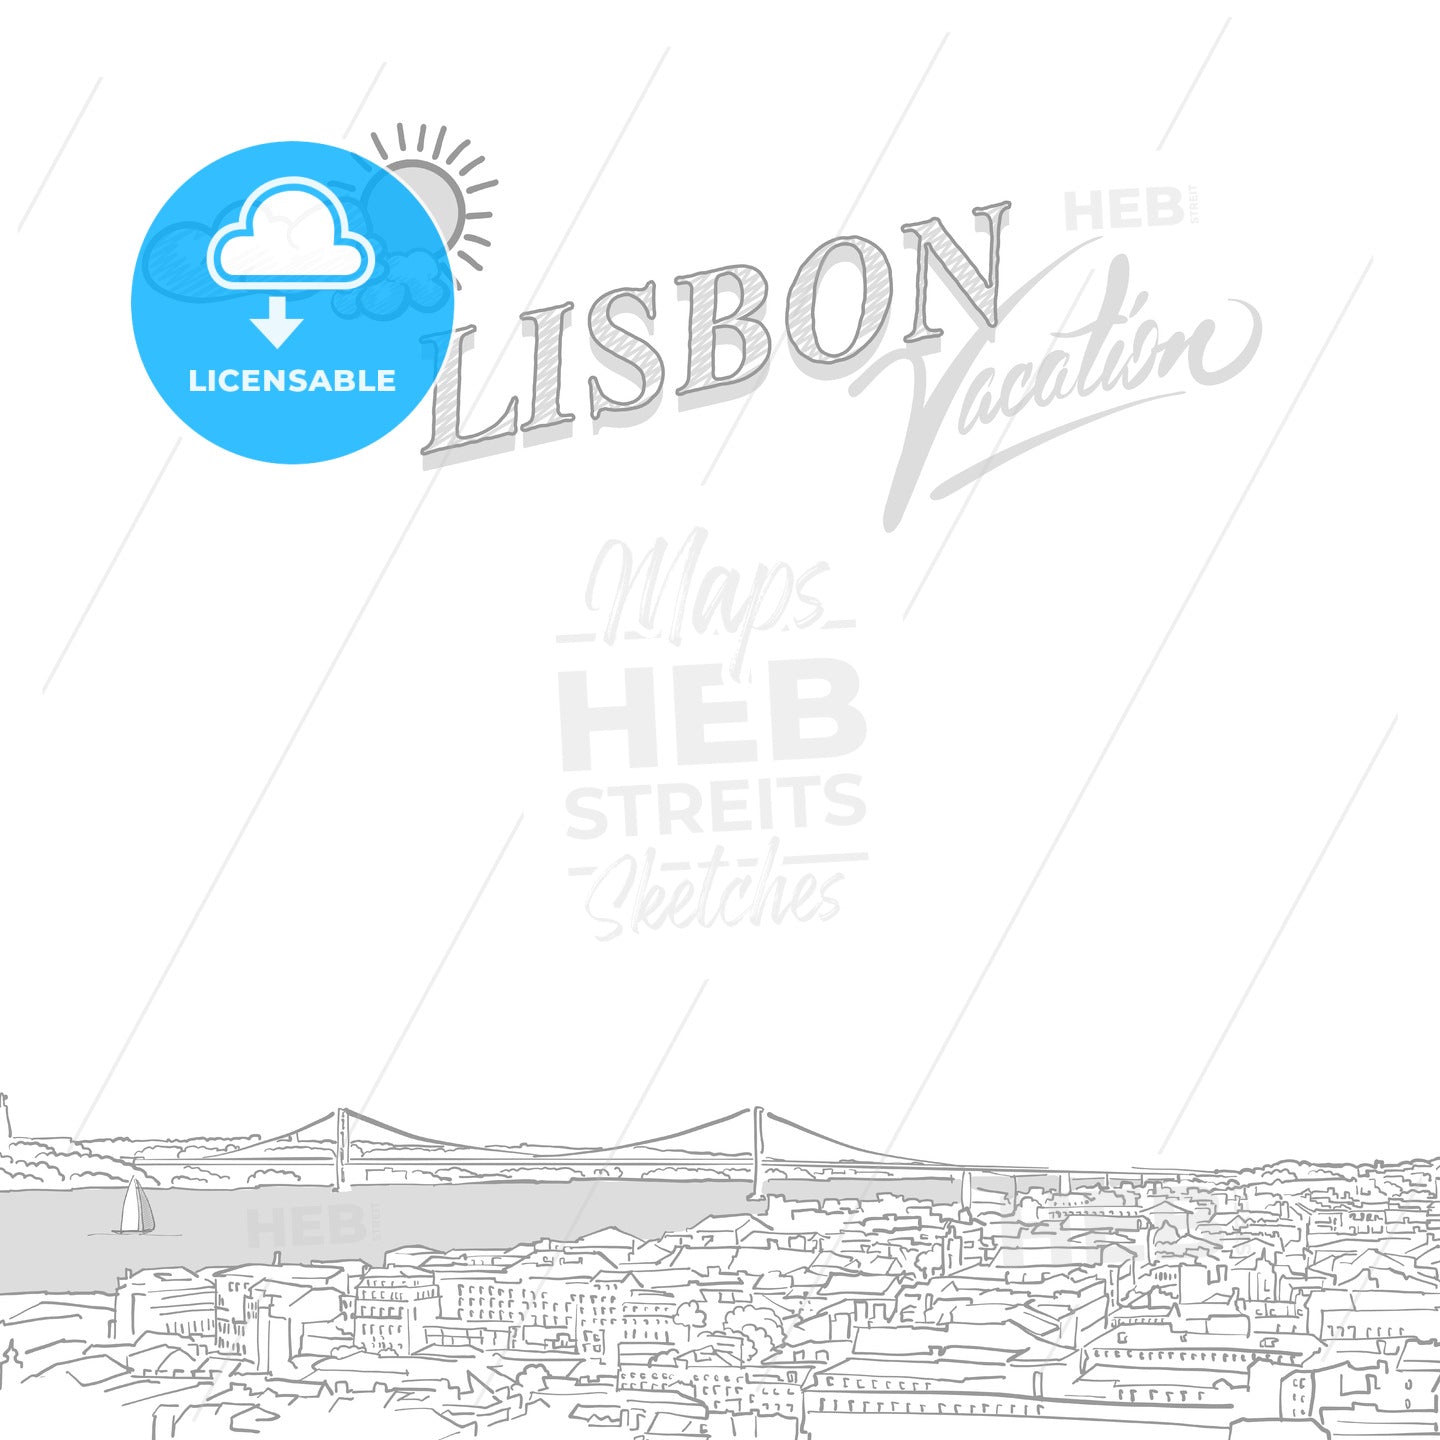 Lisbon travel marketing cover – instant download